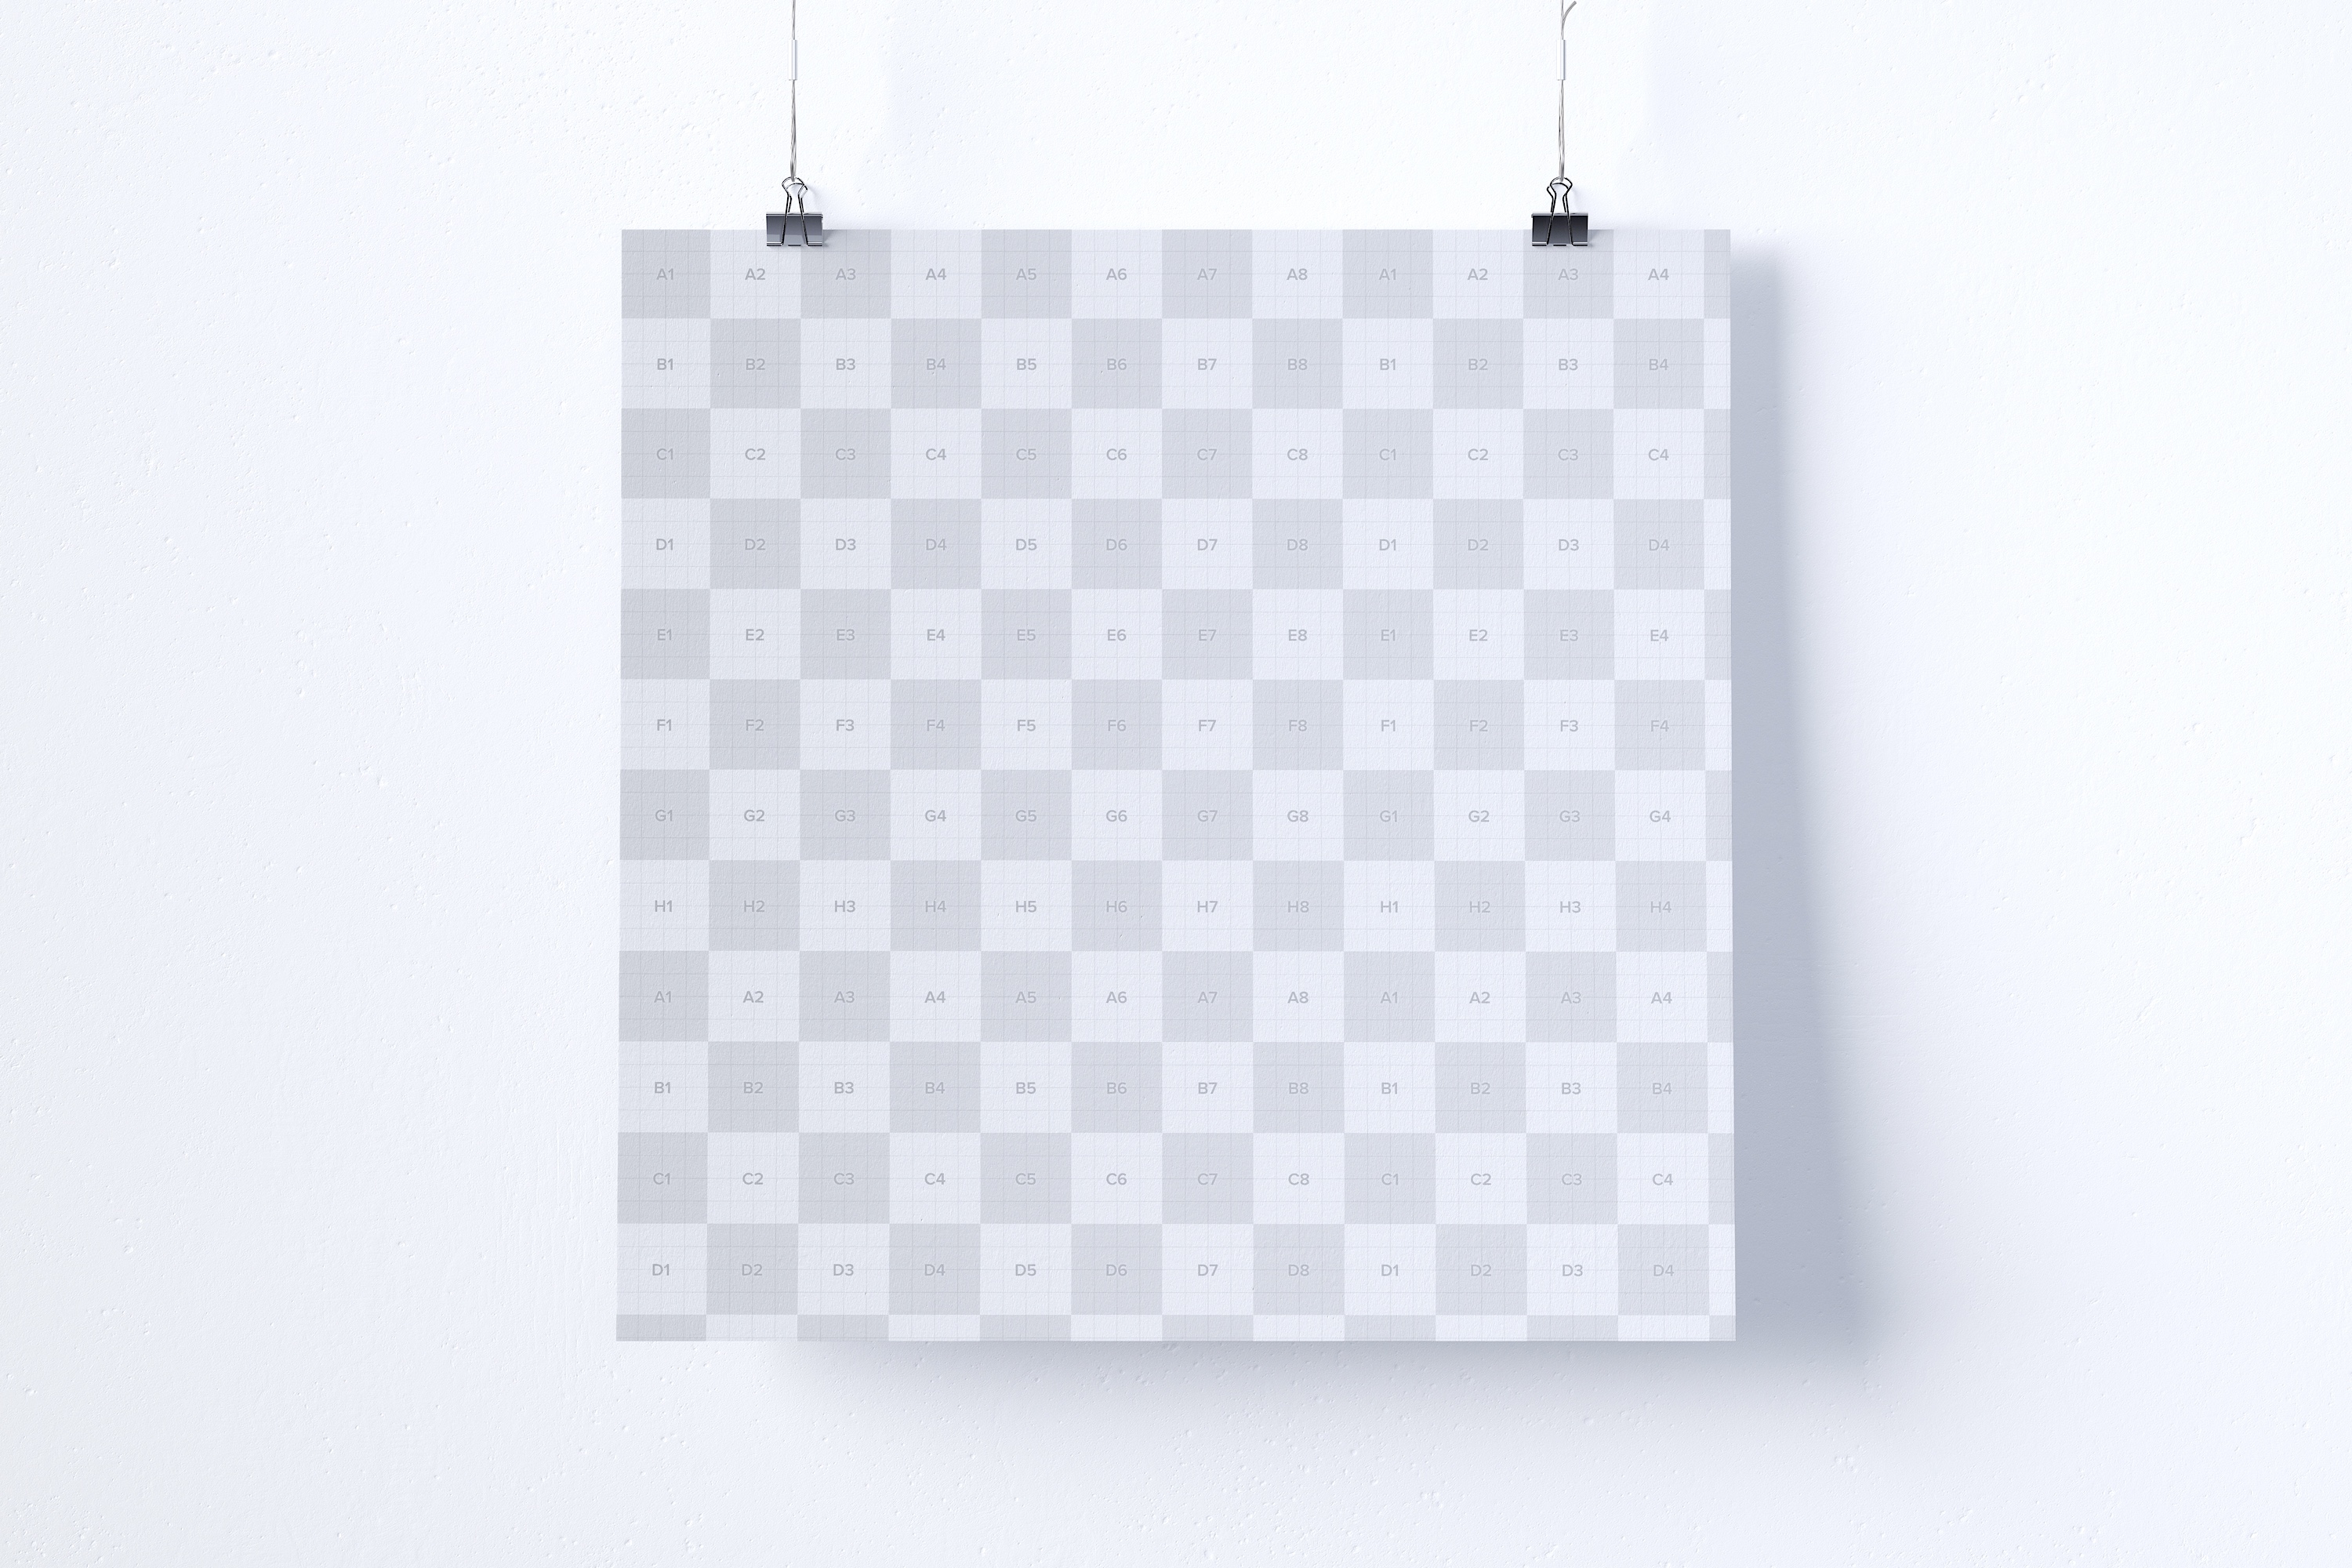 方形悬挂海报设计效果图免费样机模板 Free 1:1 square hanging poster mockup插图(1)